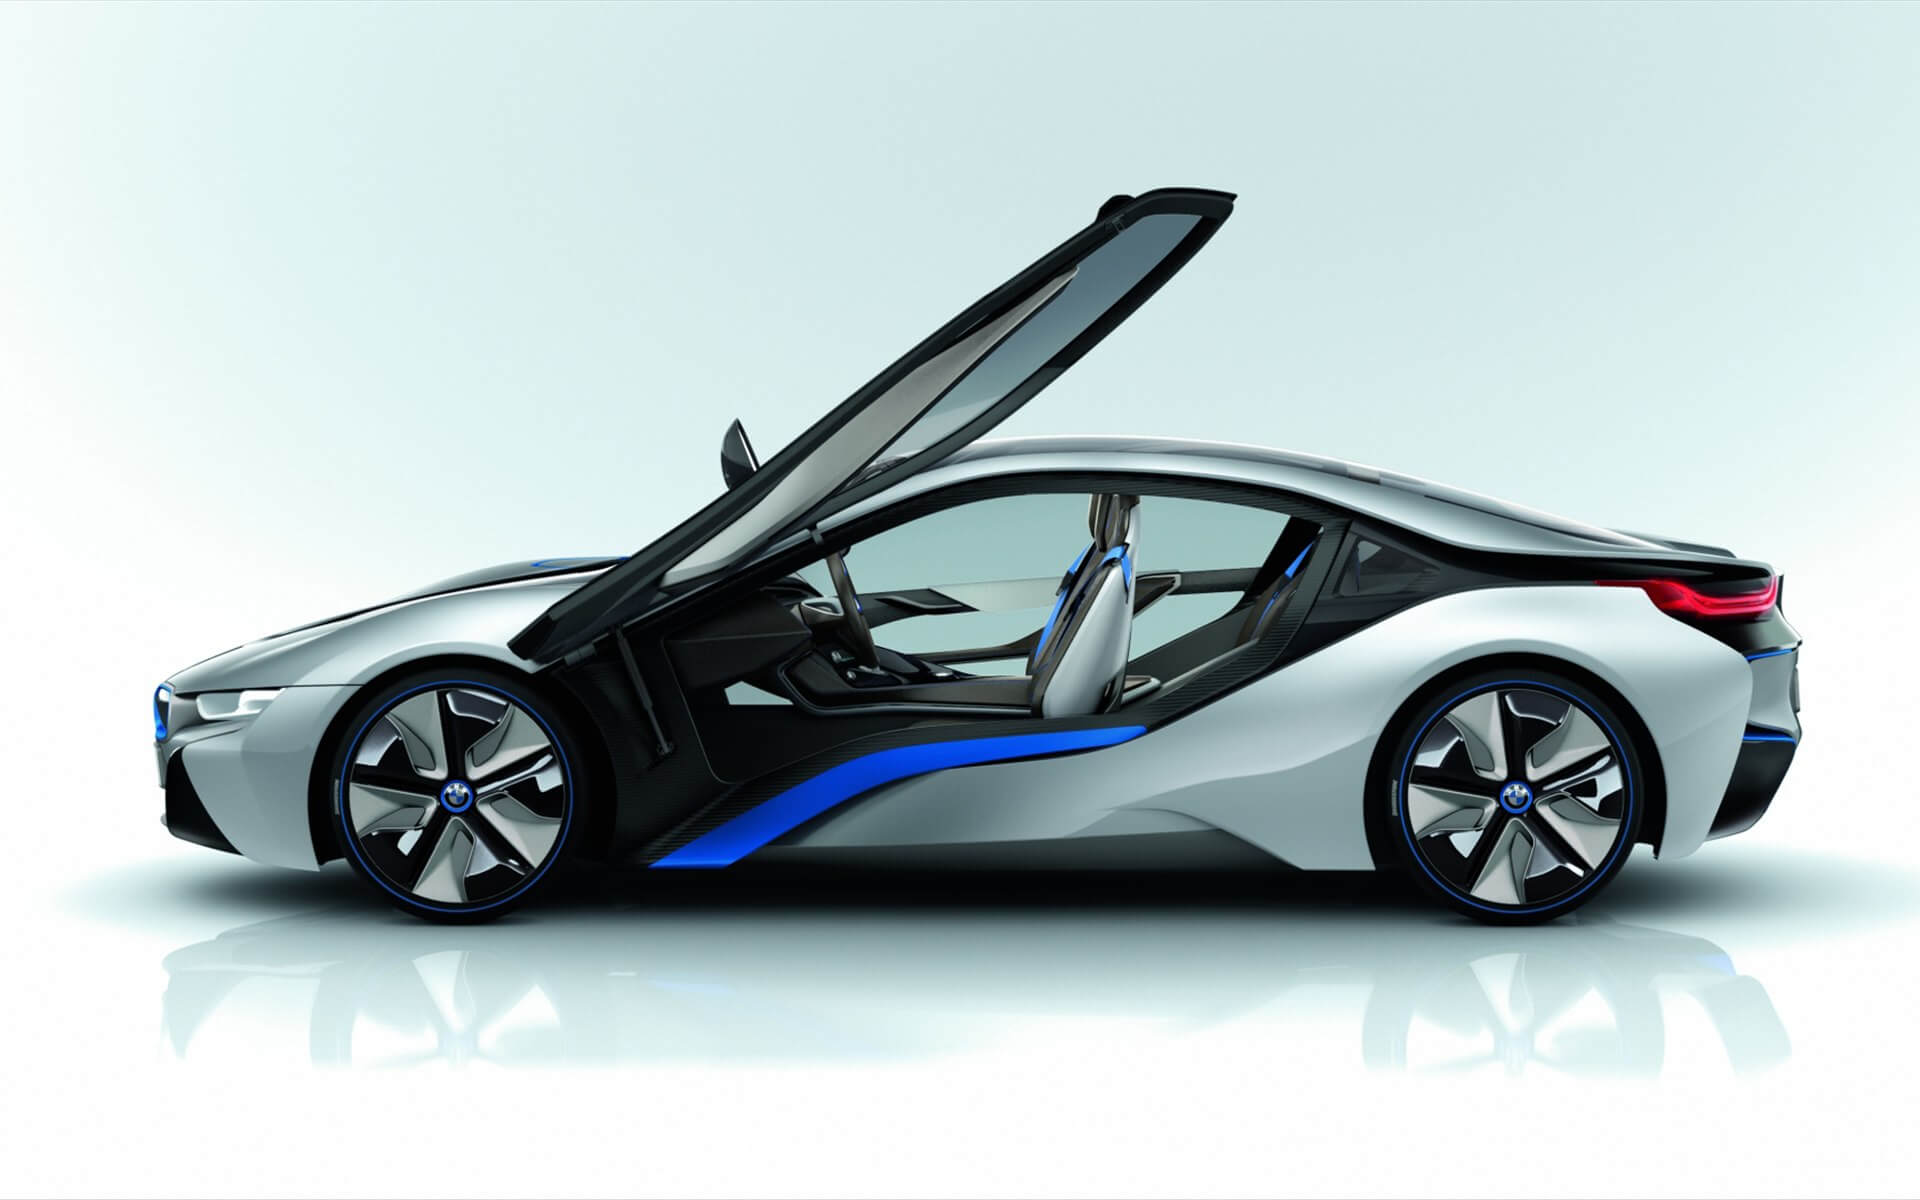 BMW i3 electric car concept